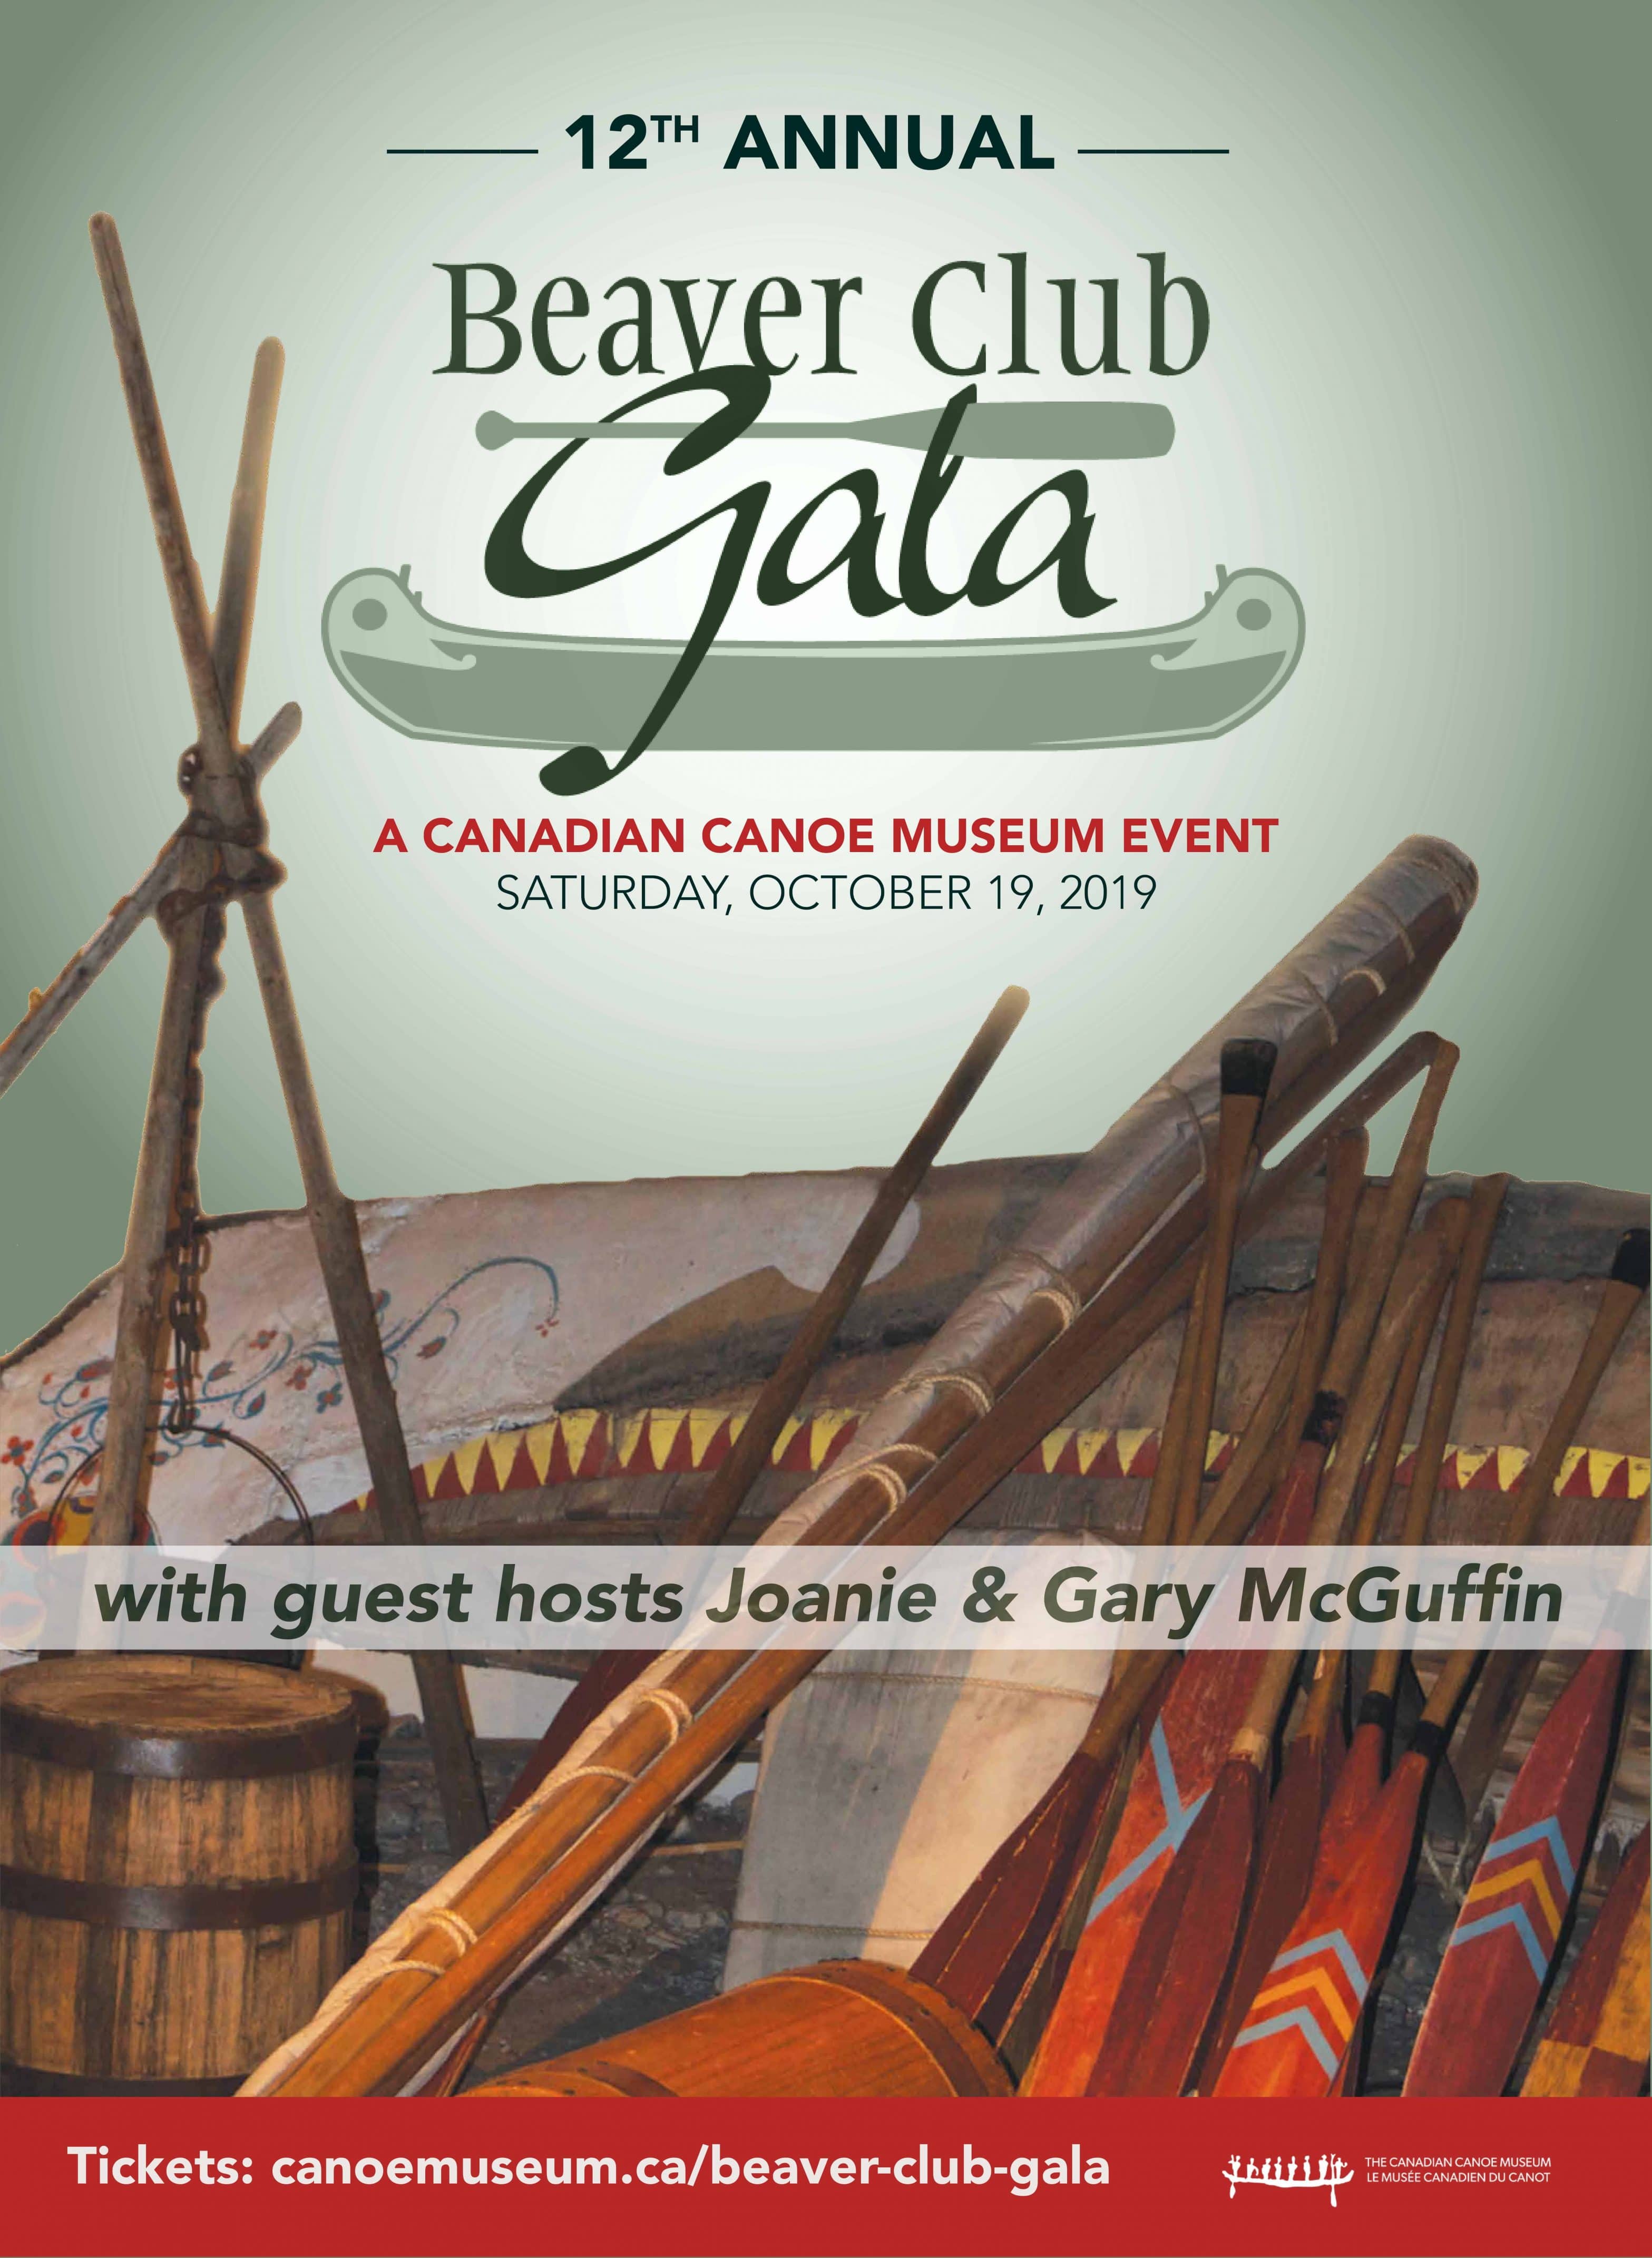 The 12th Annual Beaver Club Gala Saturday, October 19, 2019